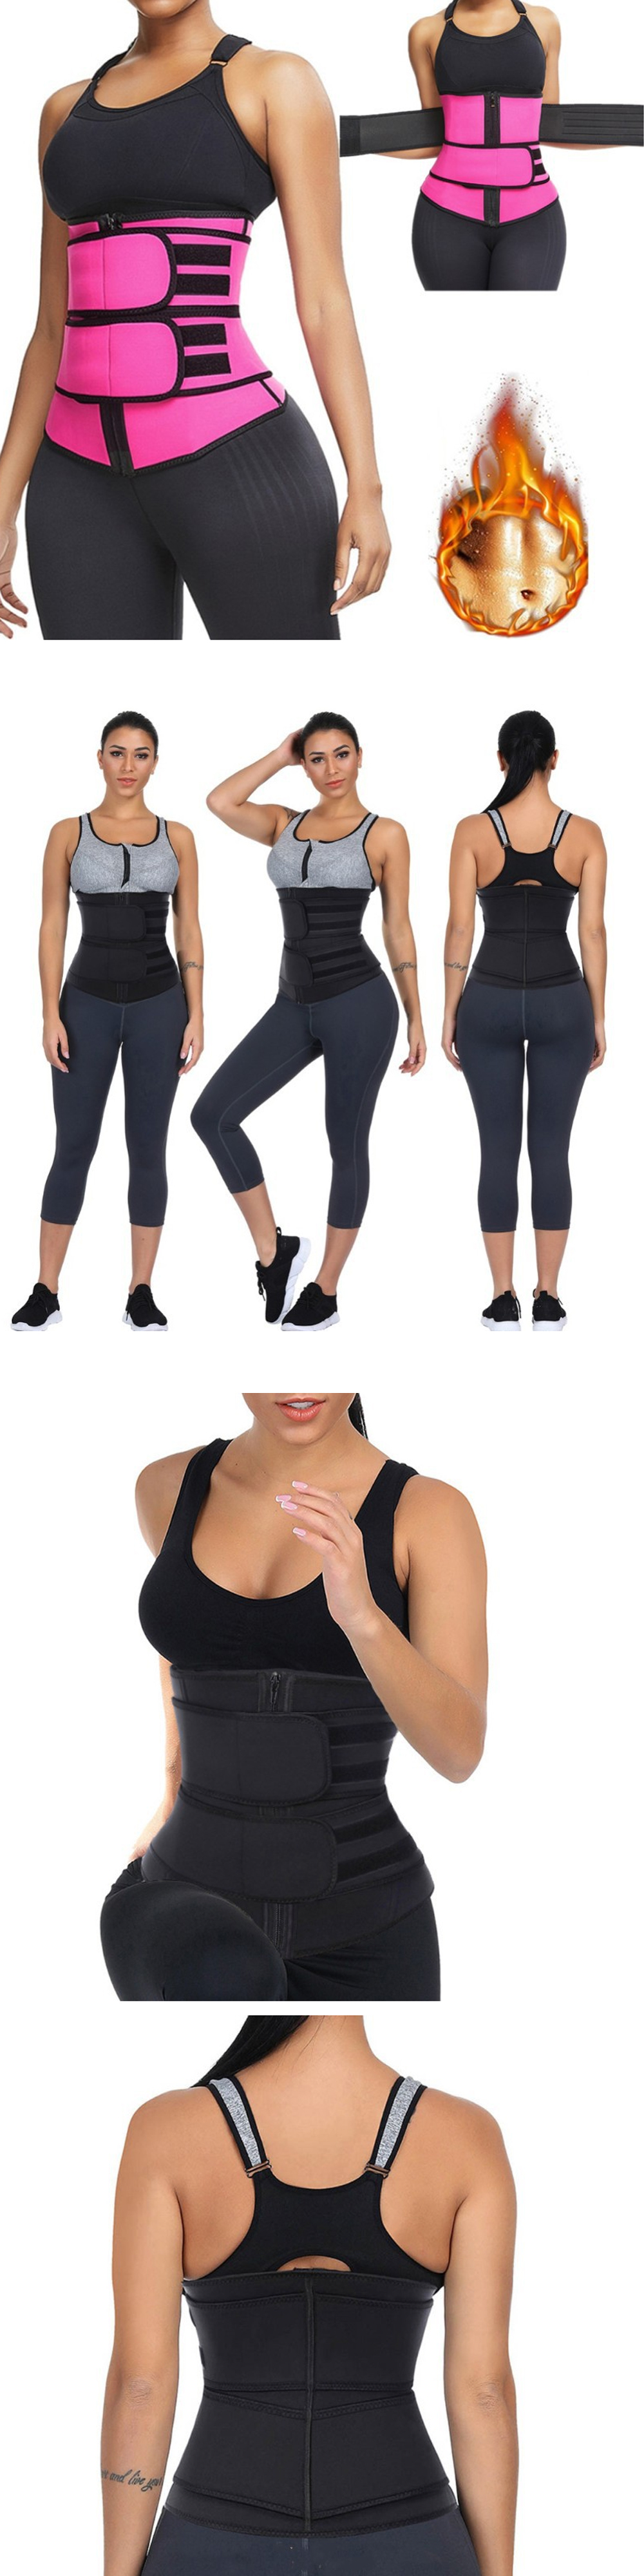 Waist-Trainer-Vest-Large-Size-Body-Shaper-Sweat-Waist-Trainer-Corset-Sports-Spandex-Yoga-Gym-Workout-1821219-1